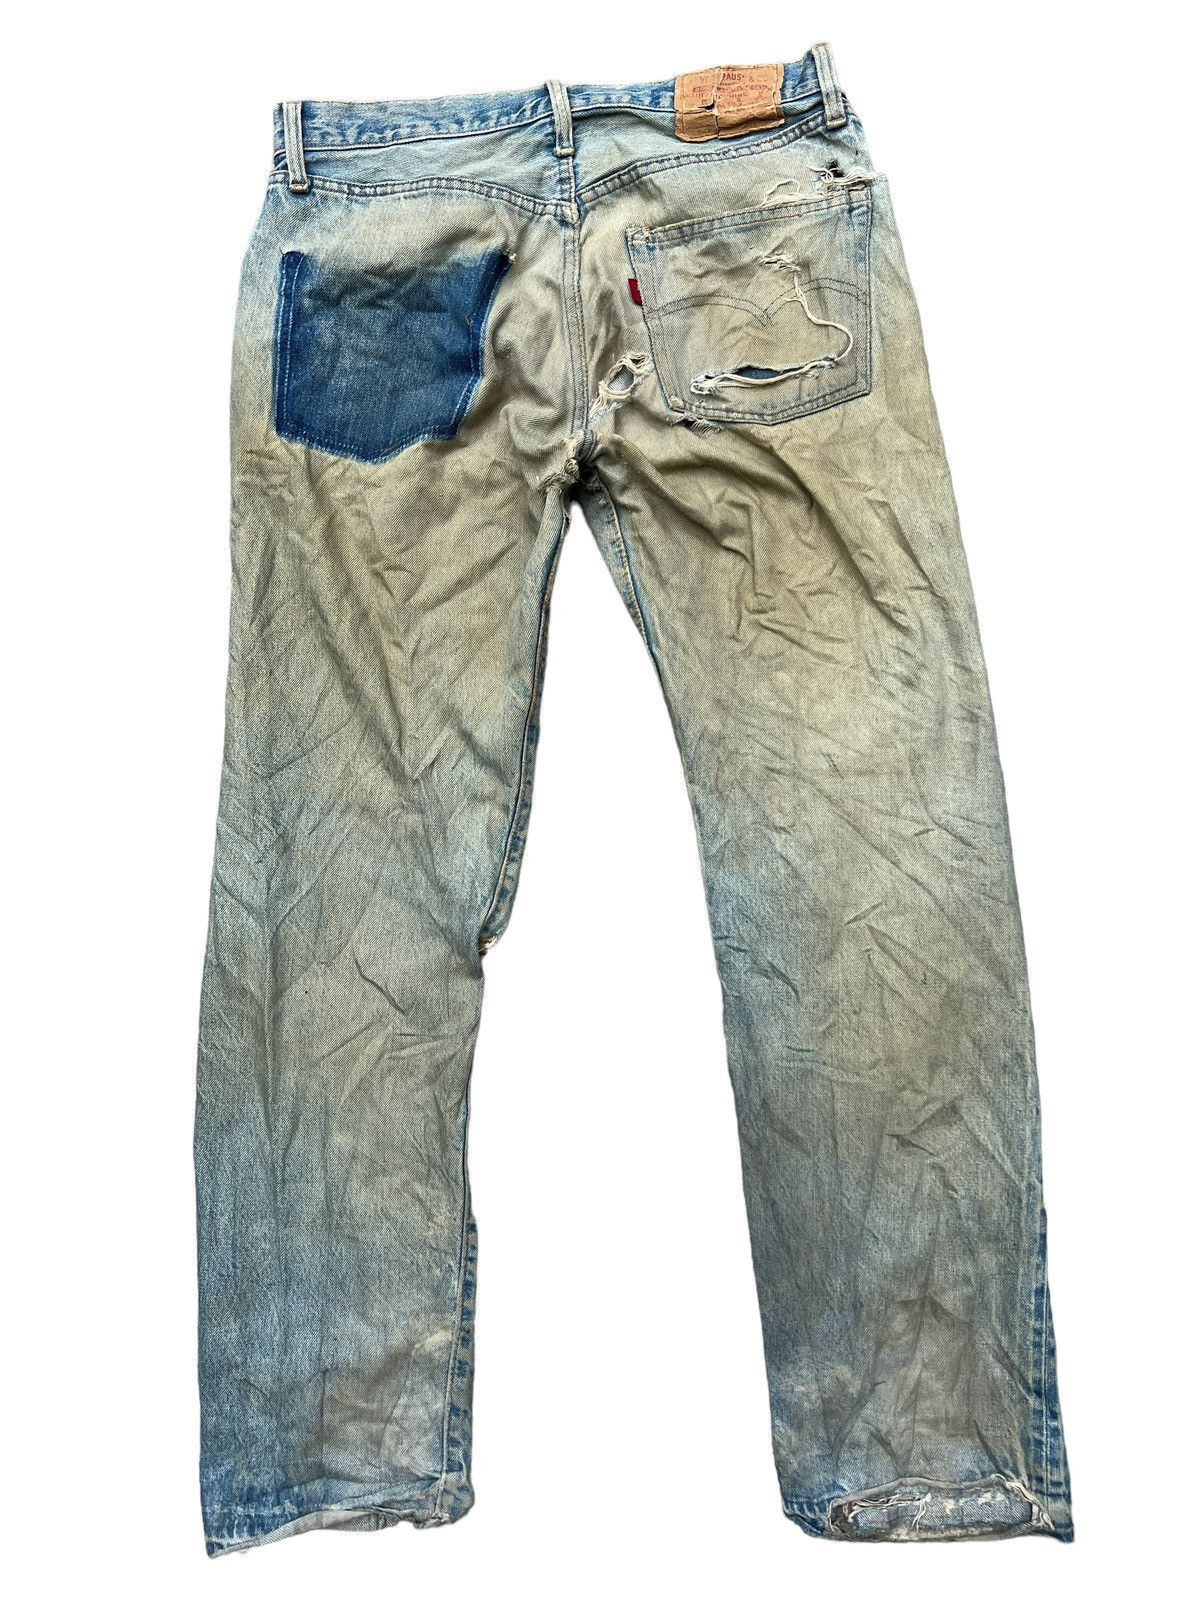 Vintage 70s Levi’s 501 Selvedge Distressed Denim Jeans 32x31 - 2